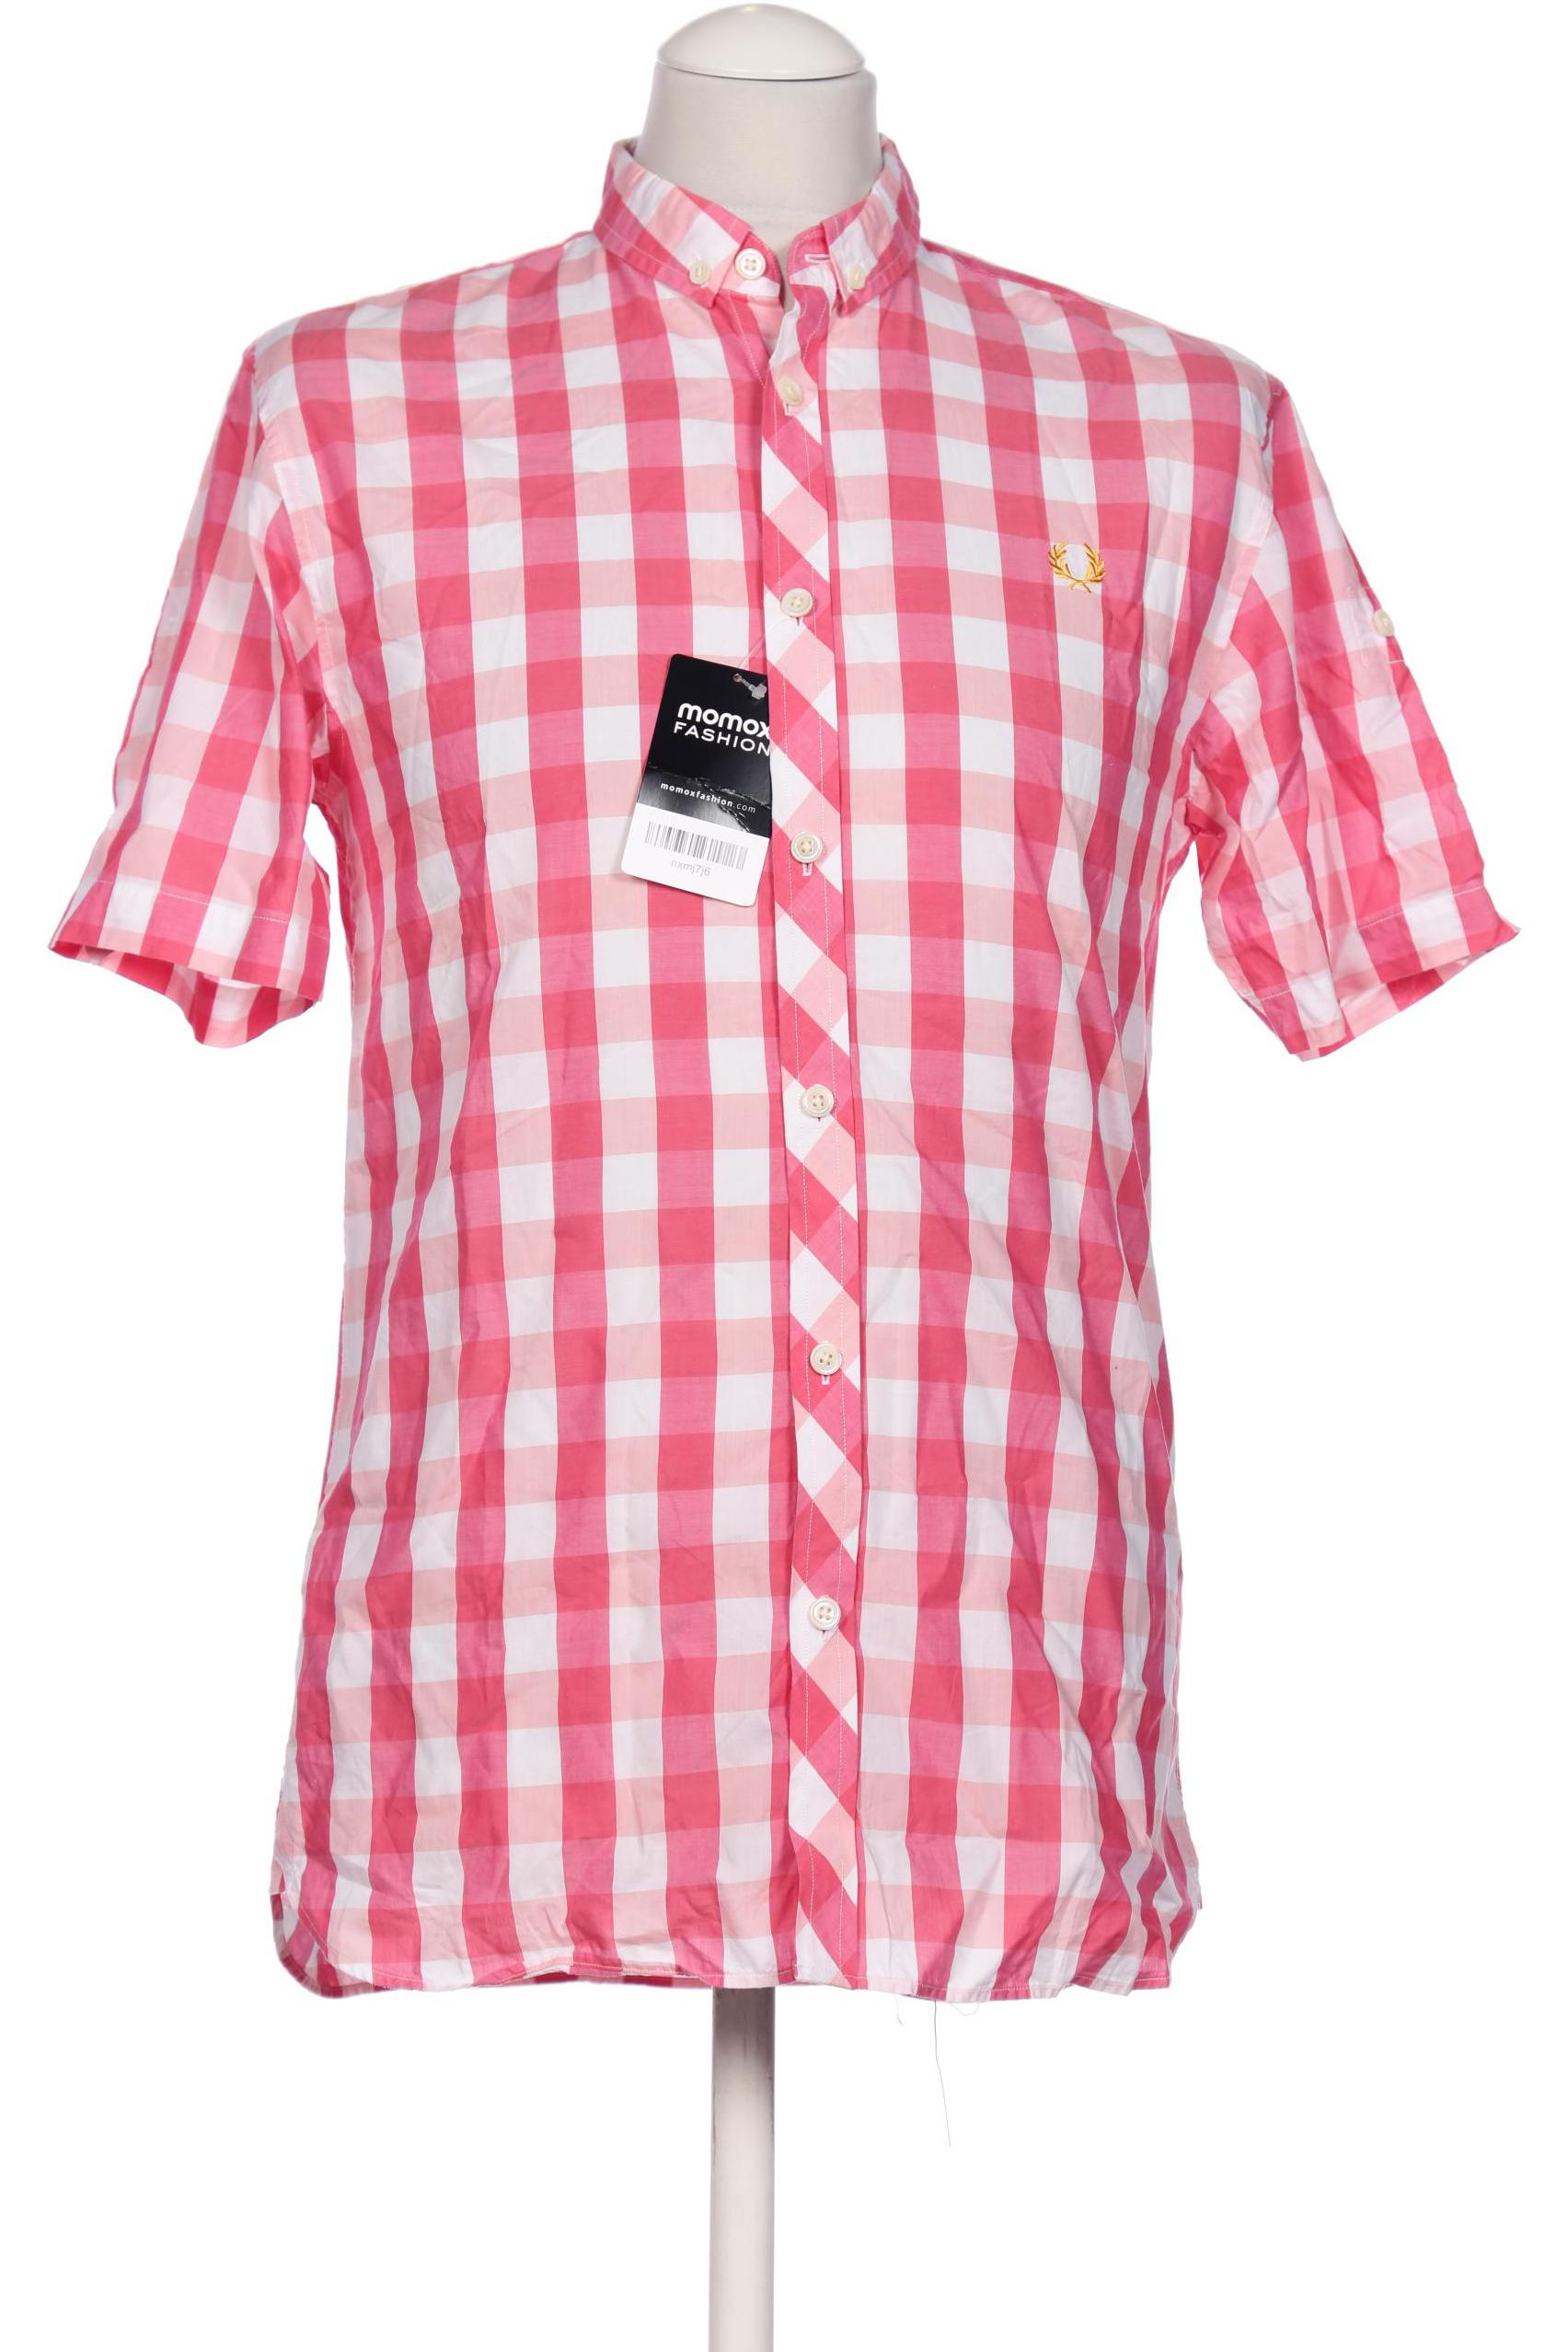 Fred Perry Herren Hemd, pink, Gr. 46 von Fred Perry